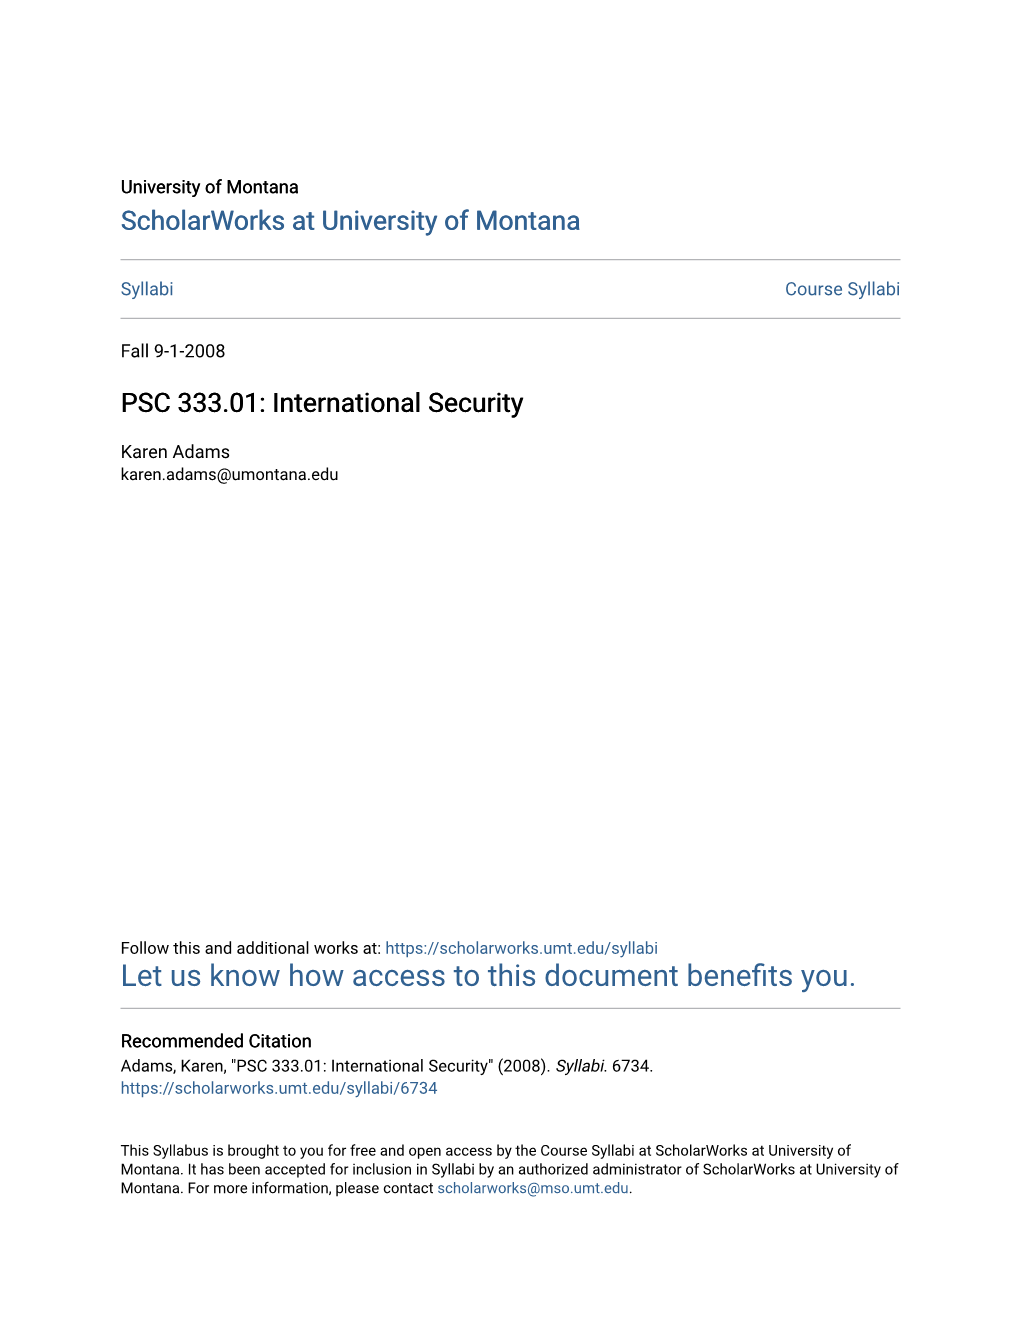 PSC 333.01: International Security